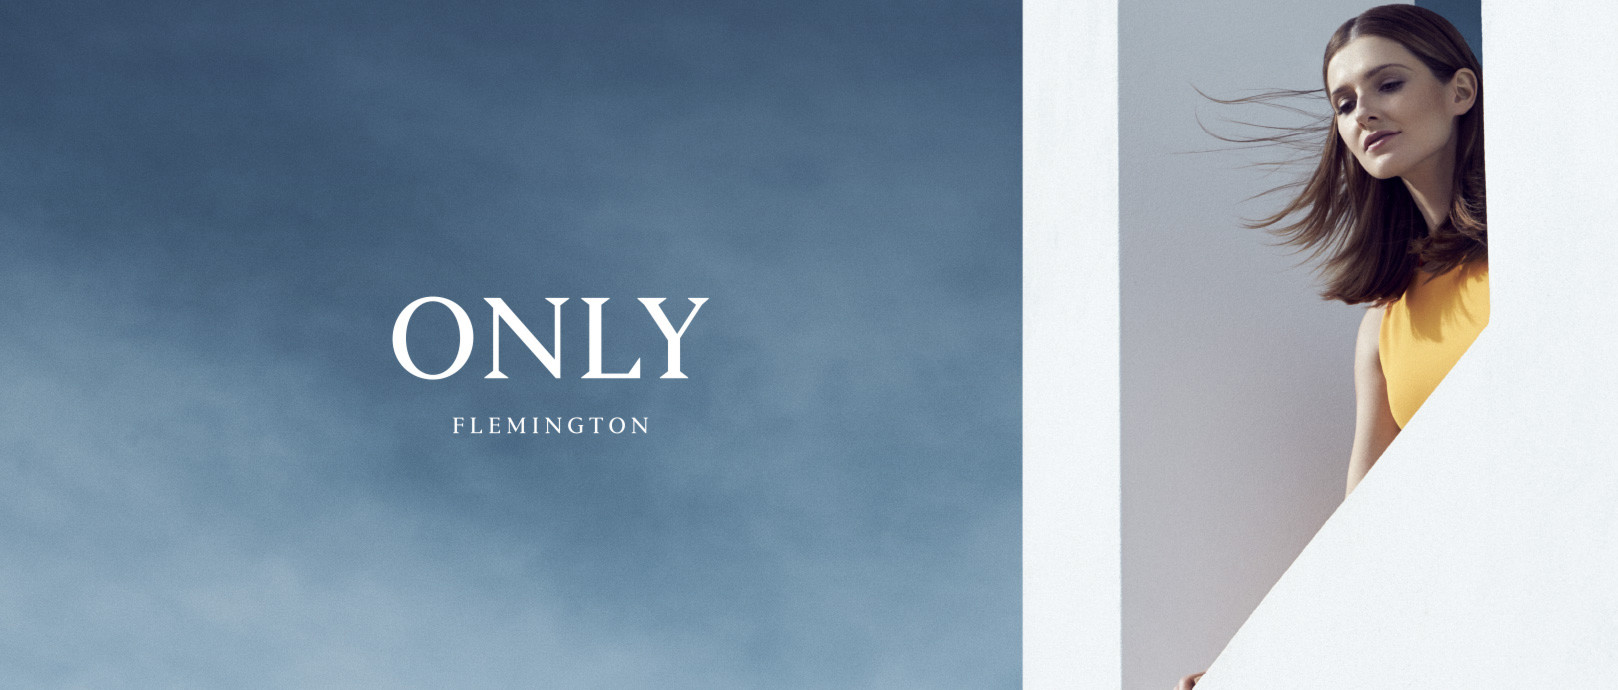 Only Flemington - Caydon